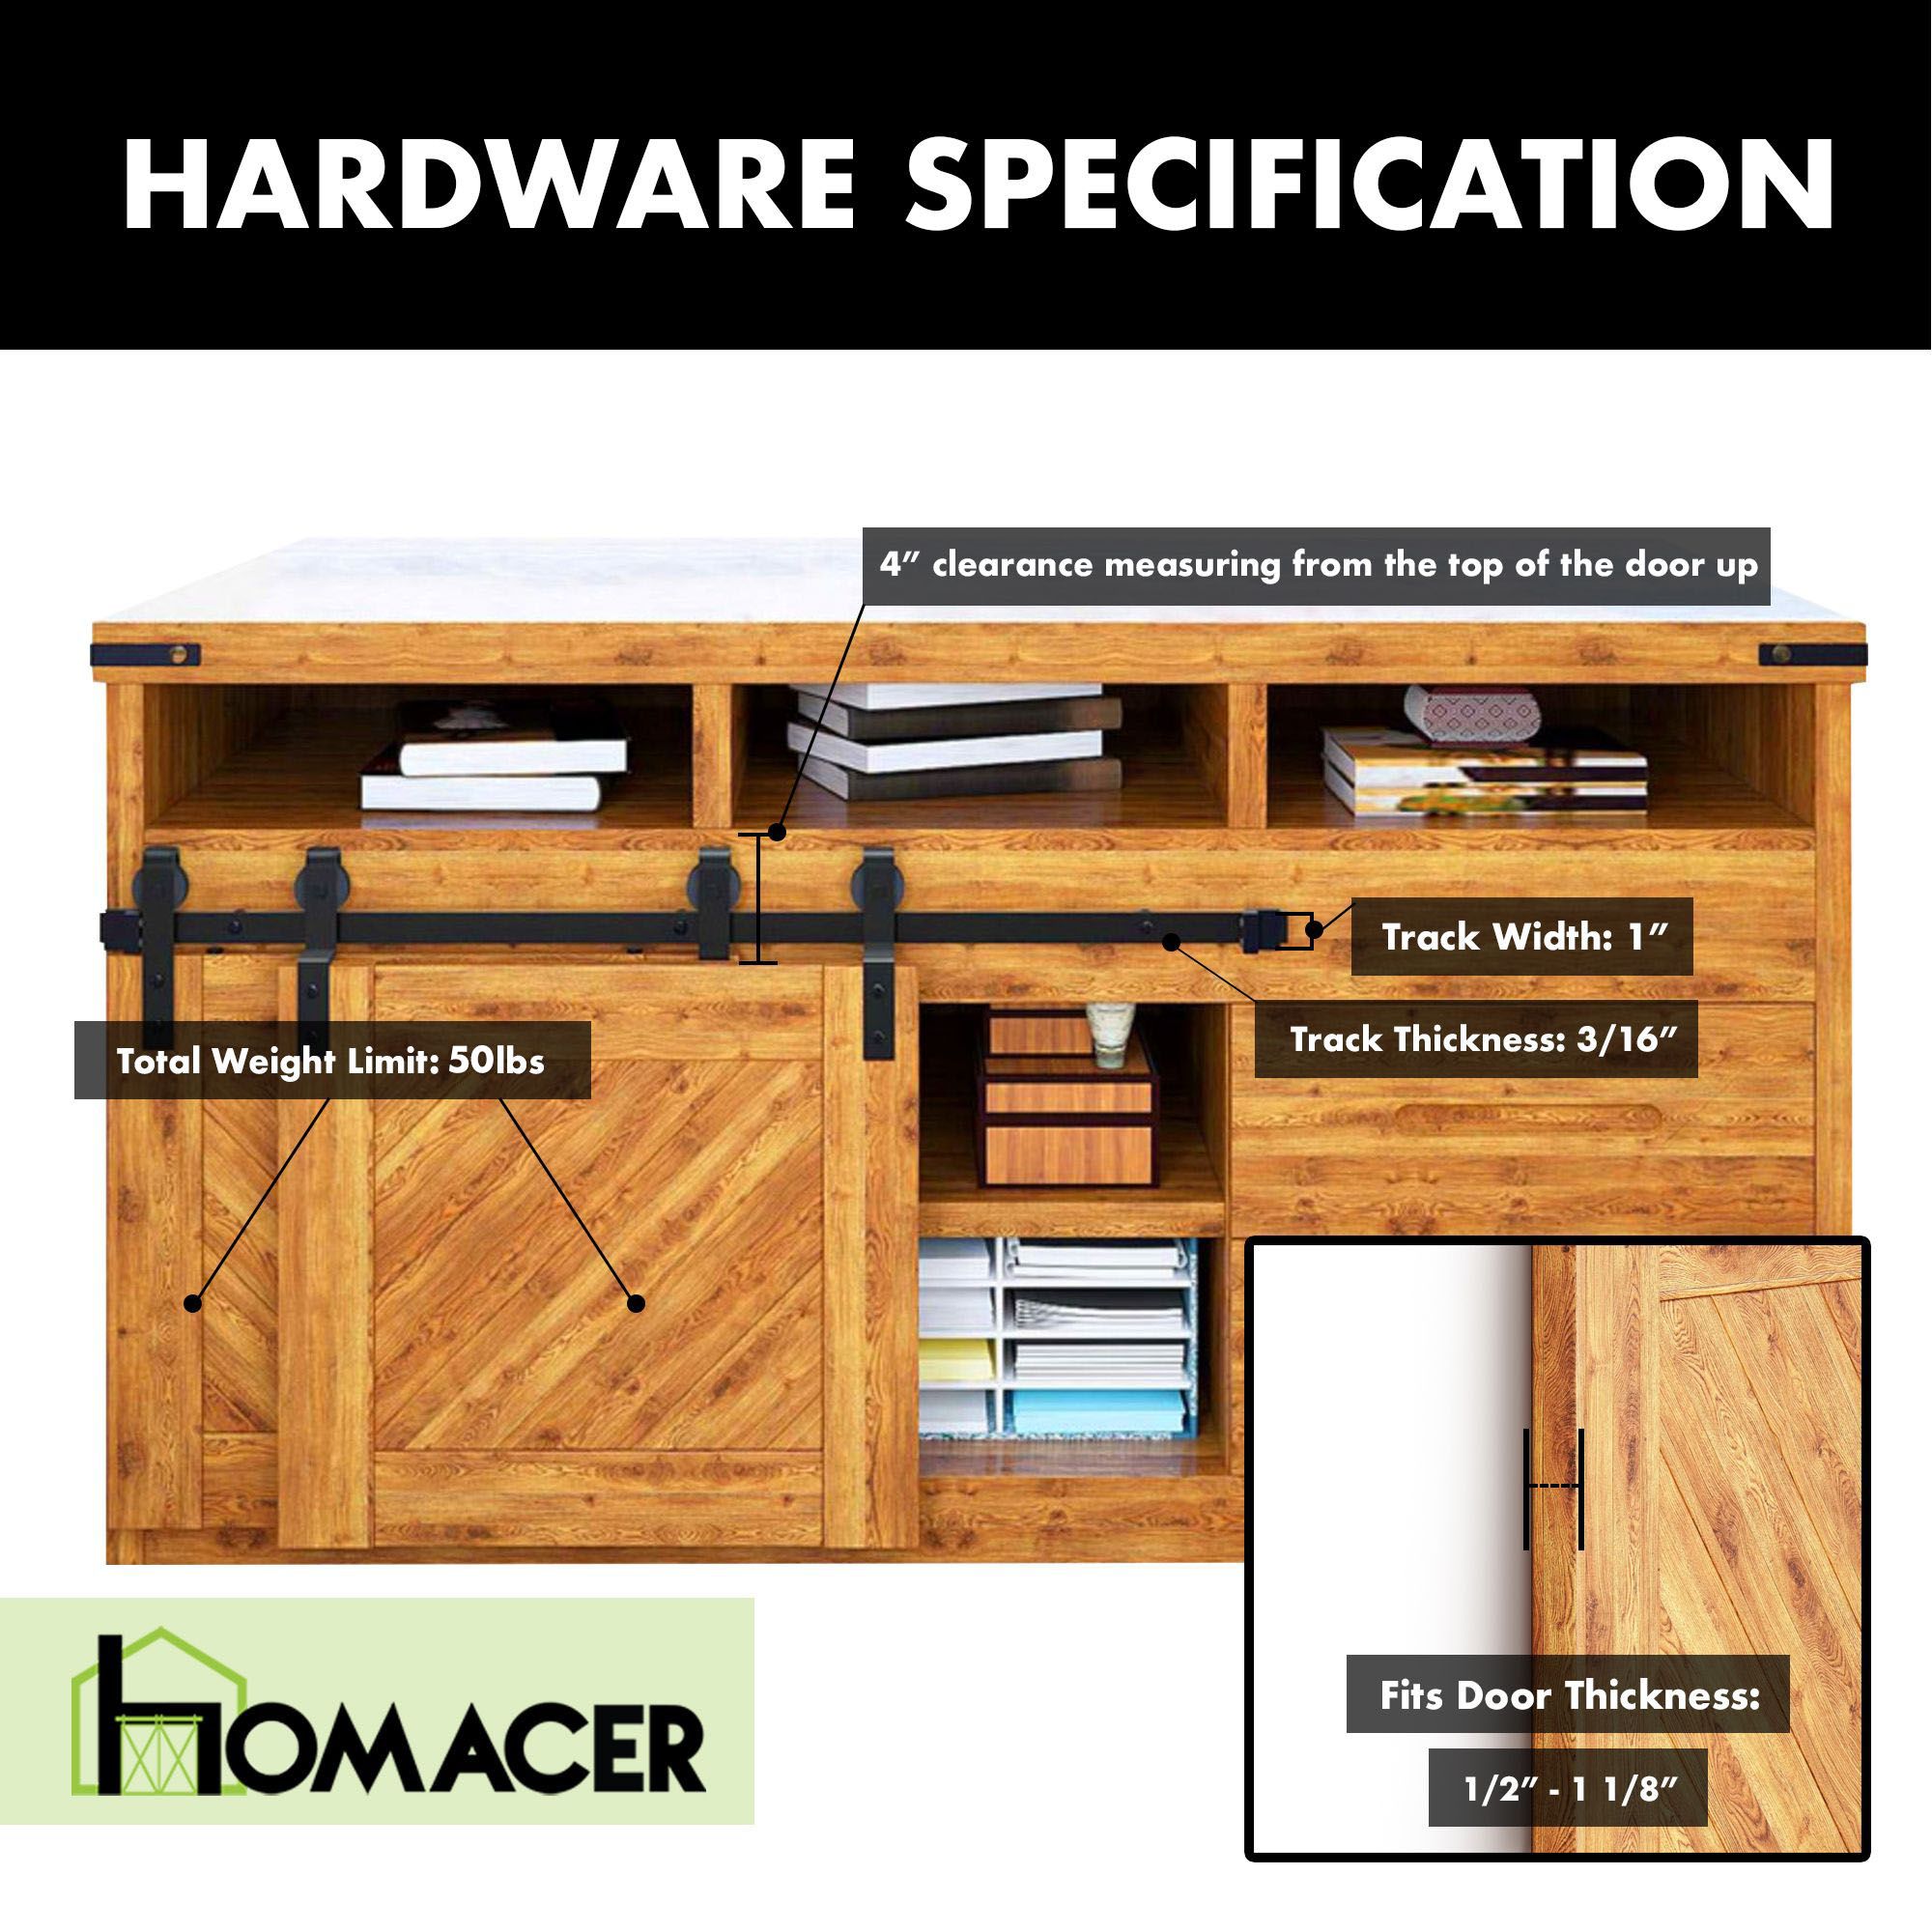 Homacer barn door hardware kit for cabinets specification